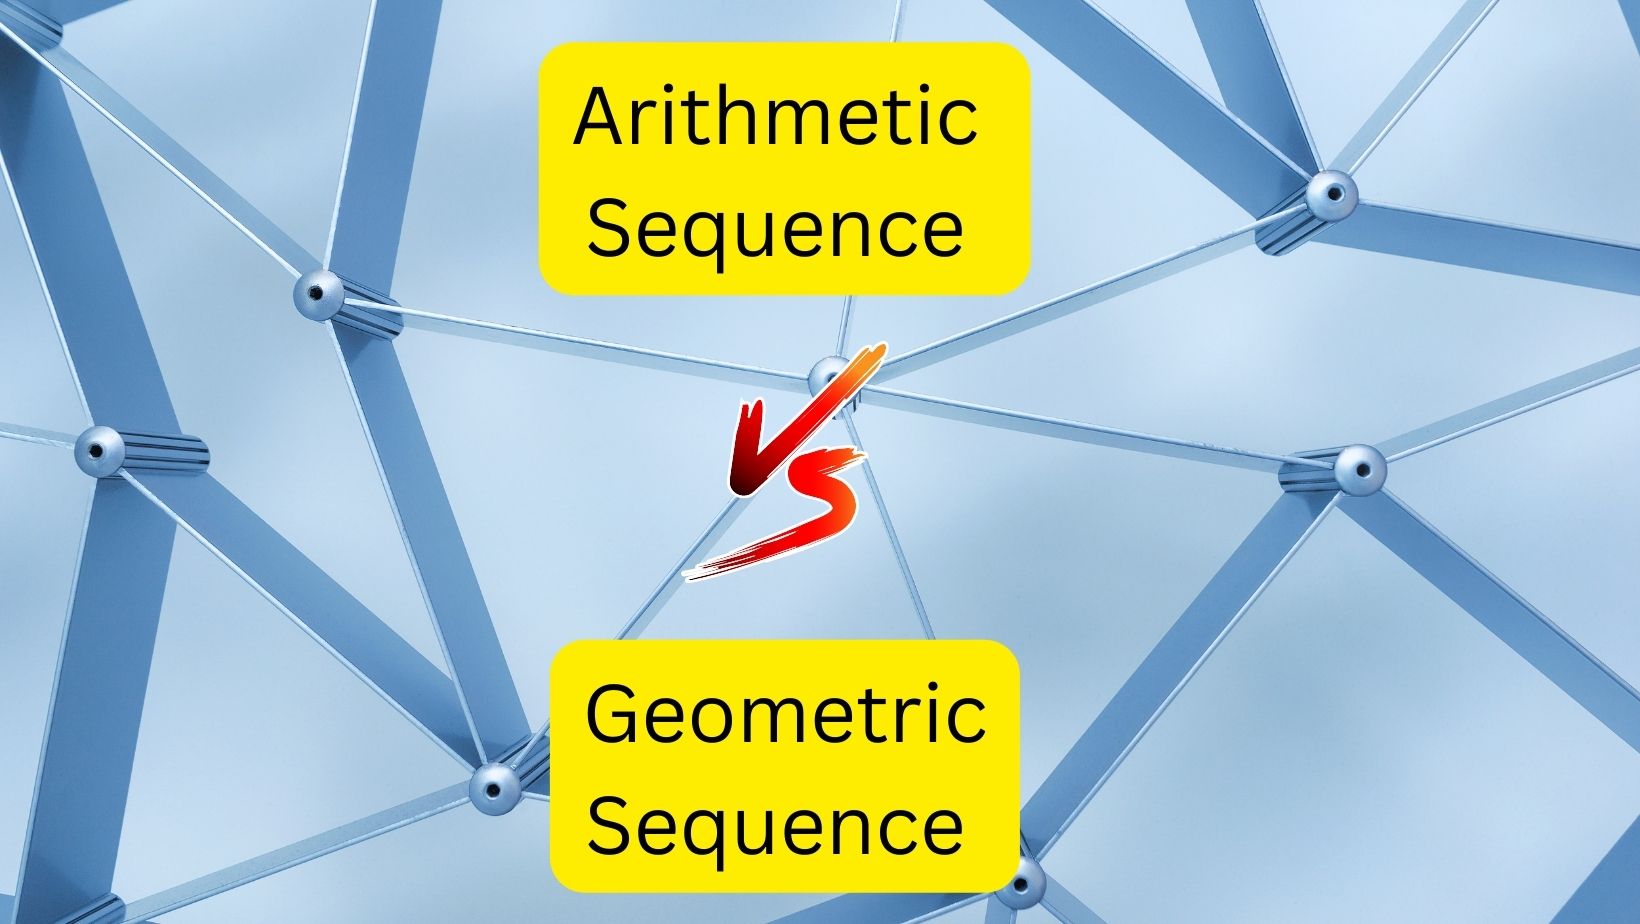 Arithmetic vs Geometric Sequence